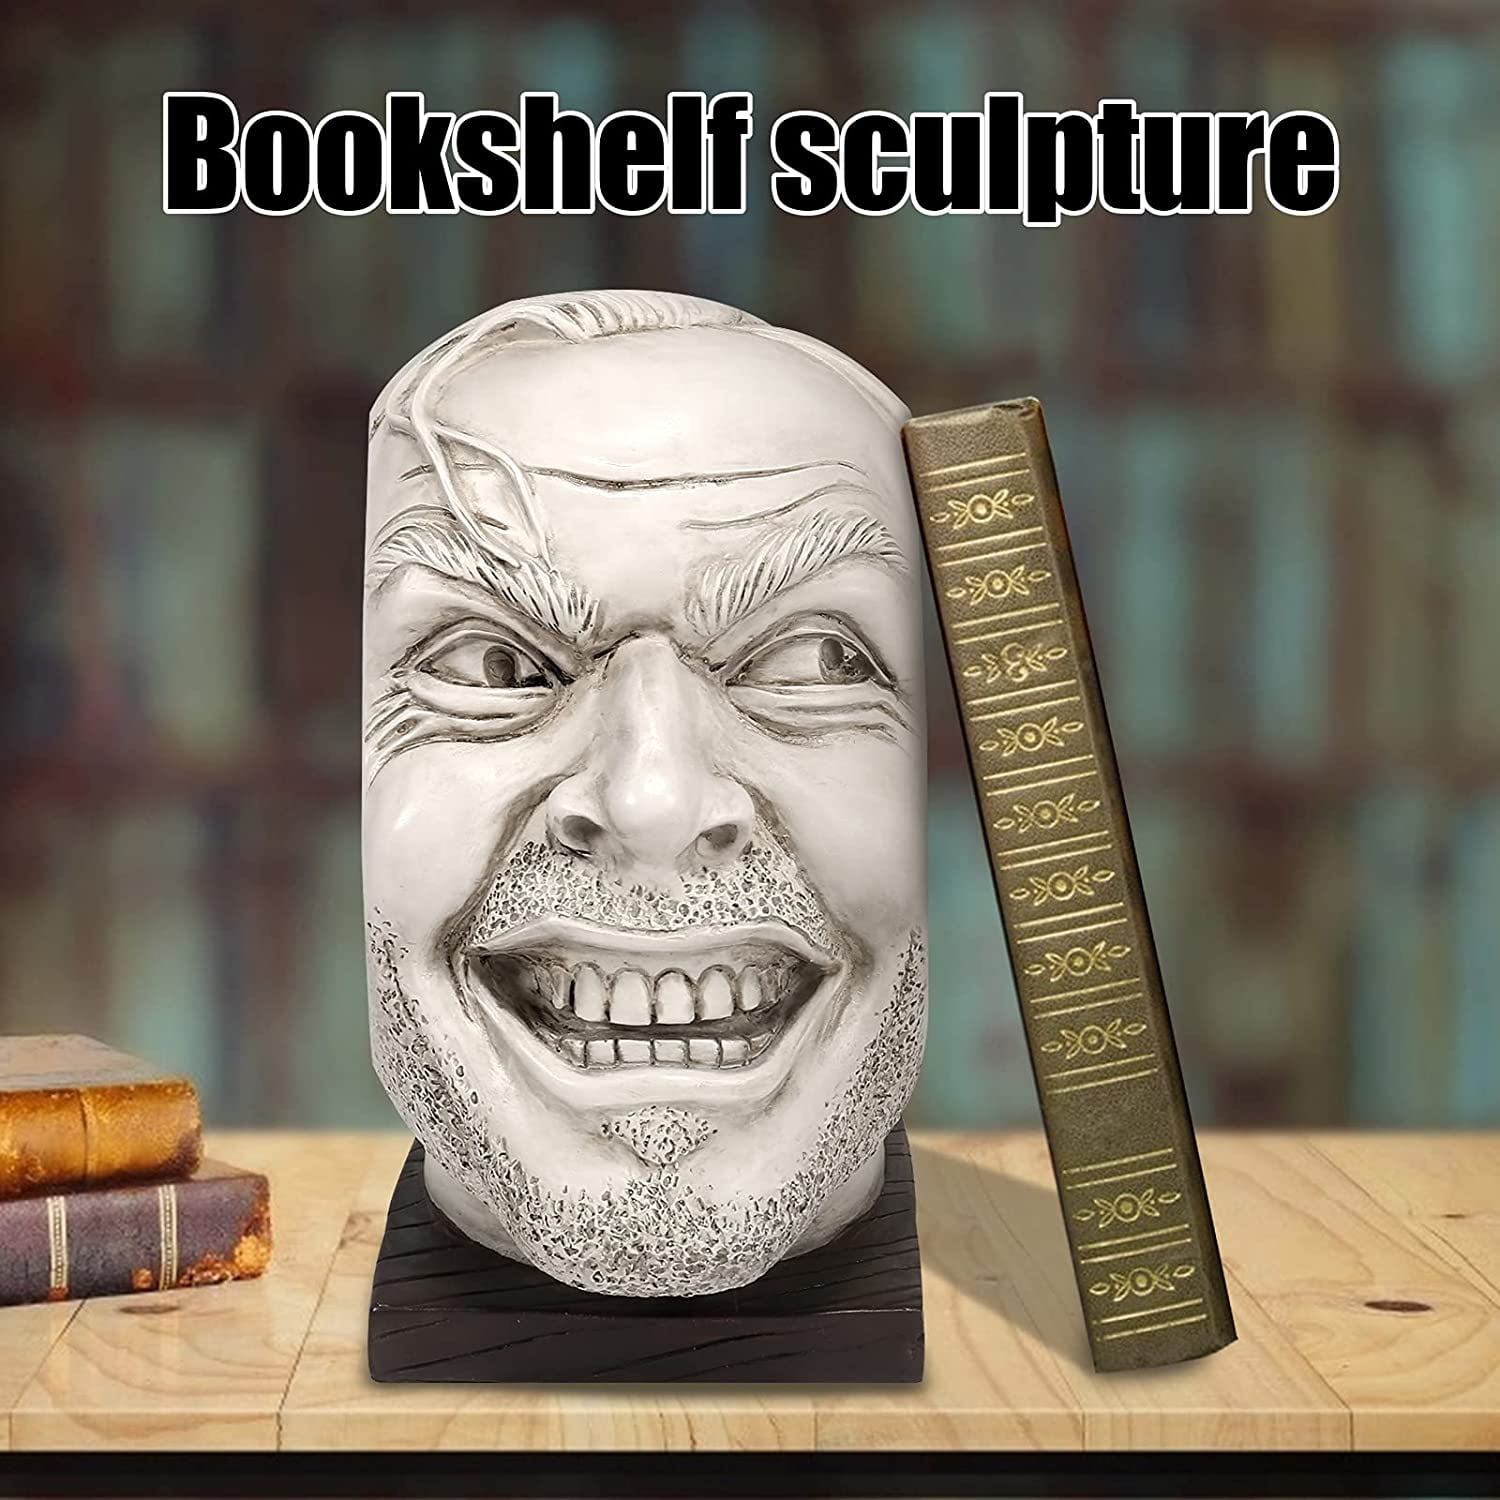 Sculpture of The Shining-bookend-Library-“Here’s Johnny”Sculpture,Creative Lifelike Resin Desktop Ornament,Book Shelf Sculpture